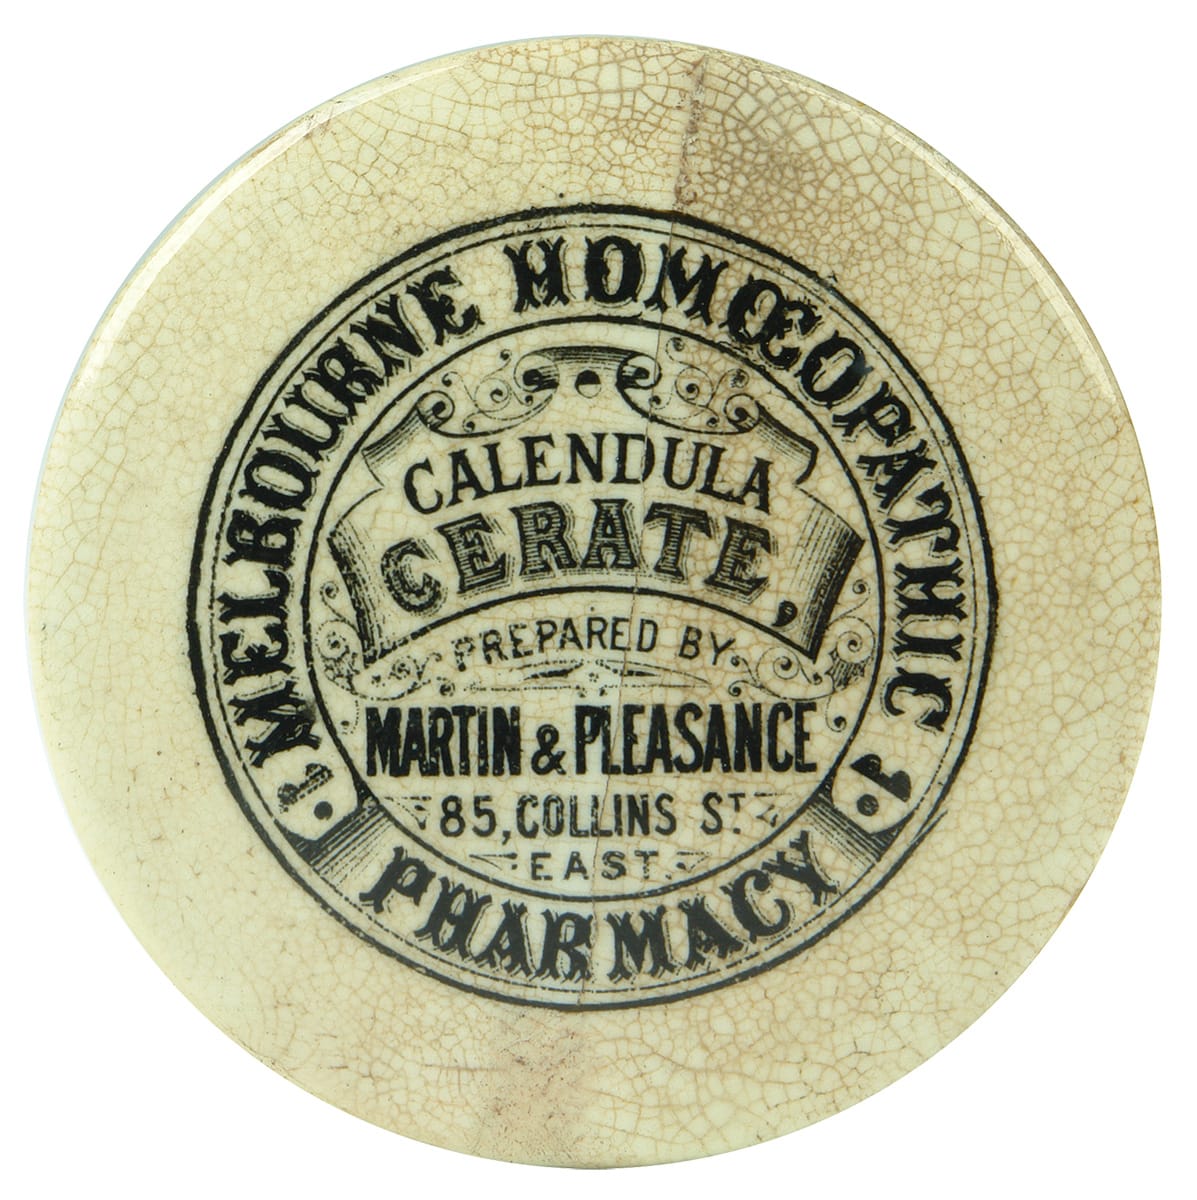 Martin Pleasance Melbourne Homeopathic Calendula Cerate Pot Lid